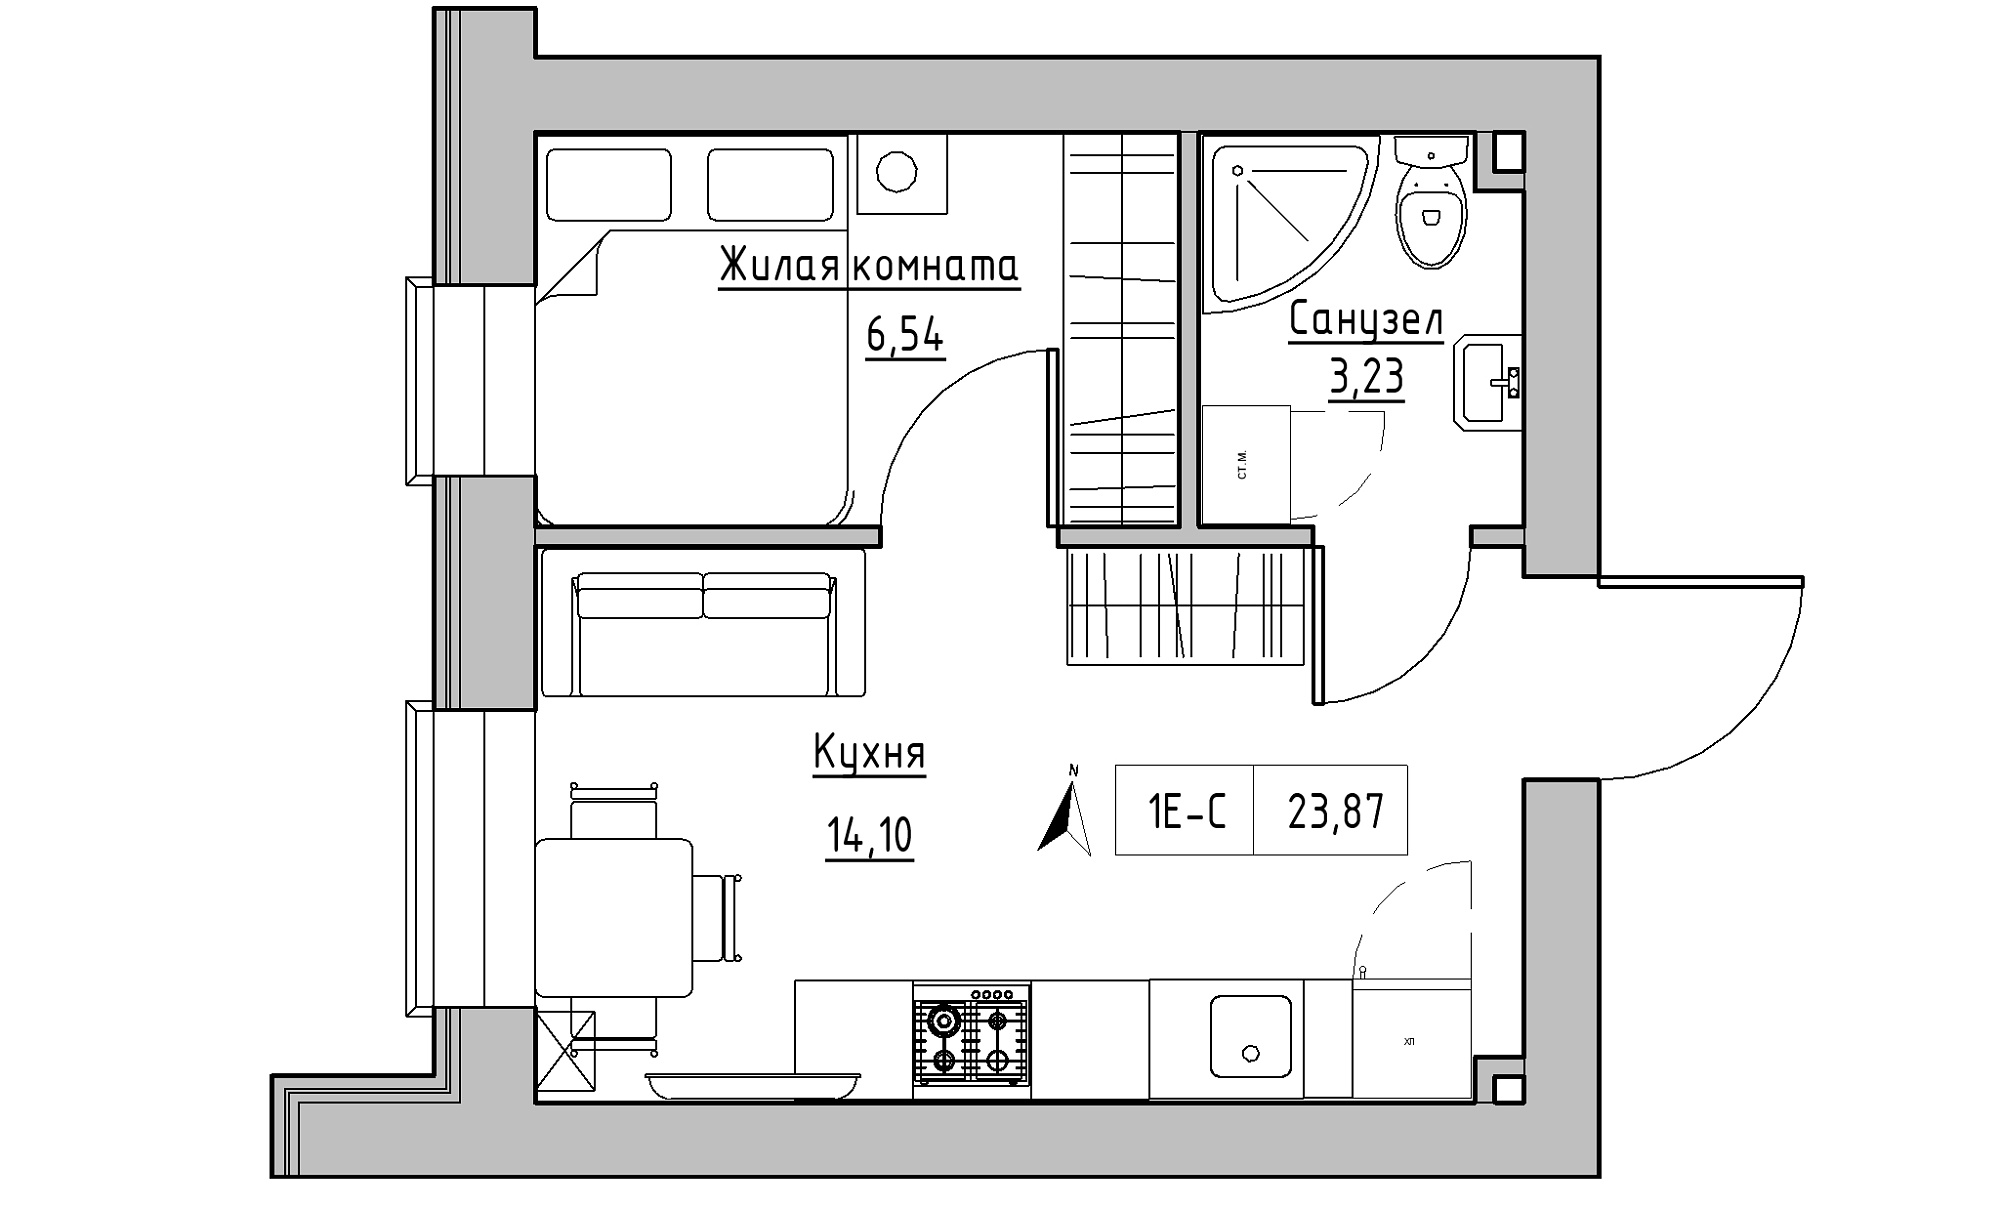 Planning 1-rm flats area 23.87m2, KS-016-04/0012.